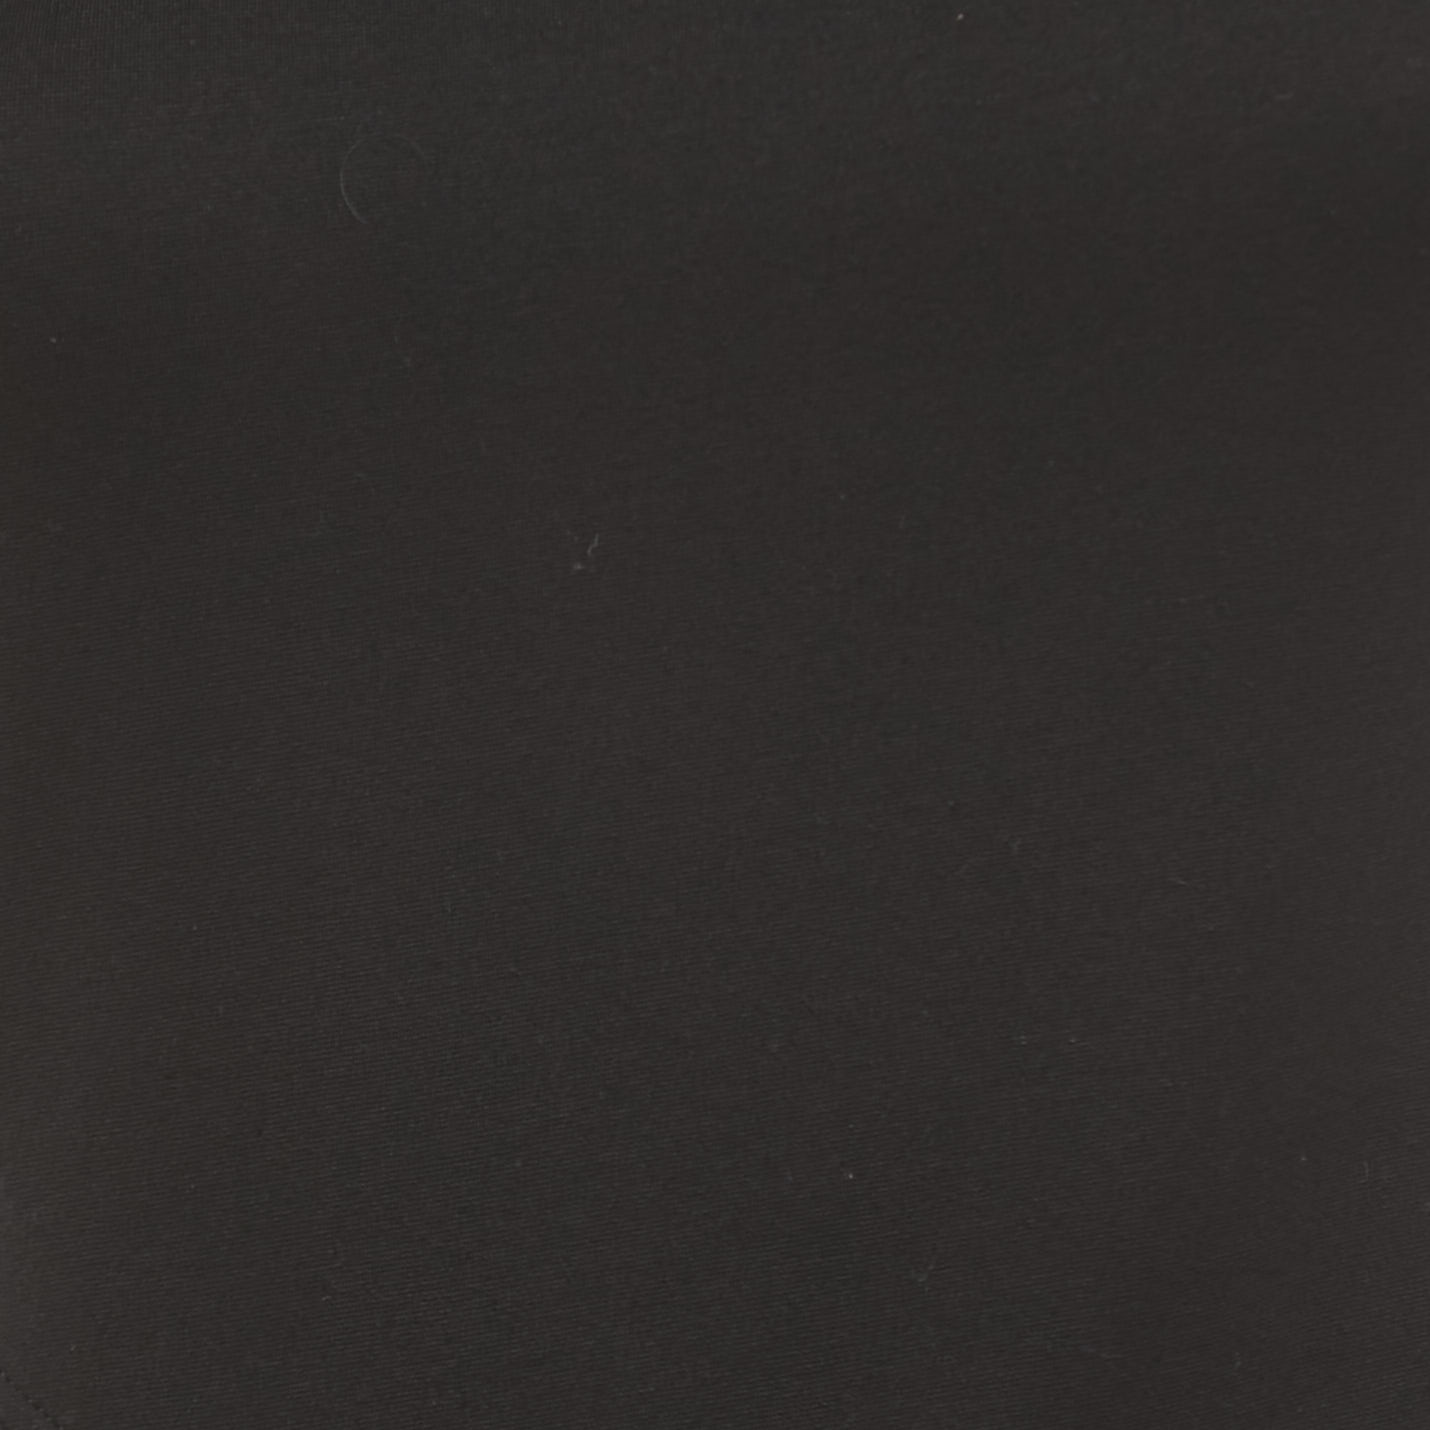 Diane Von Furstenberg Black Knit Sleeveless Turtle Neck Mini Dress S